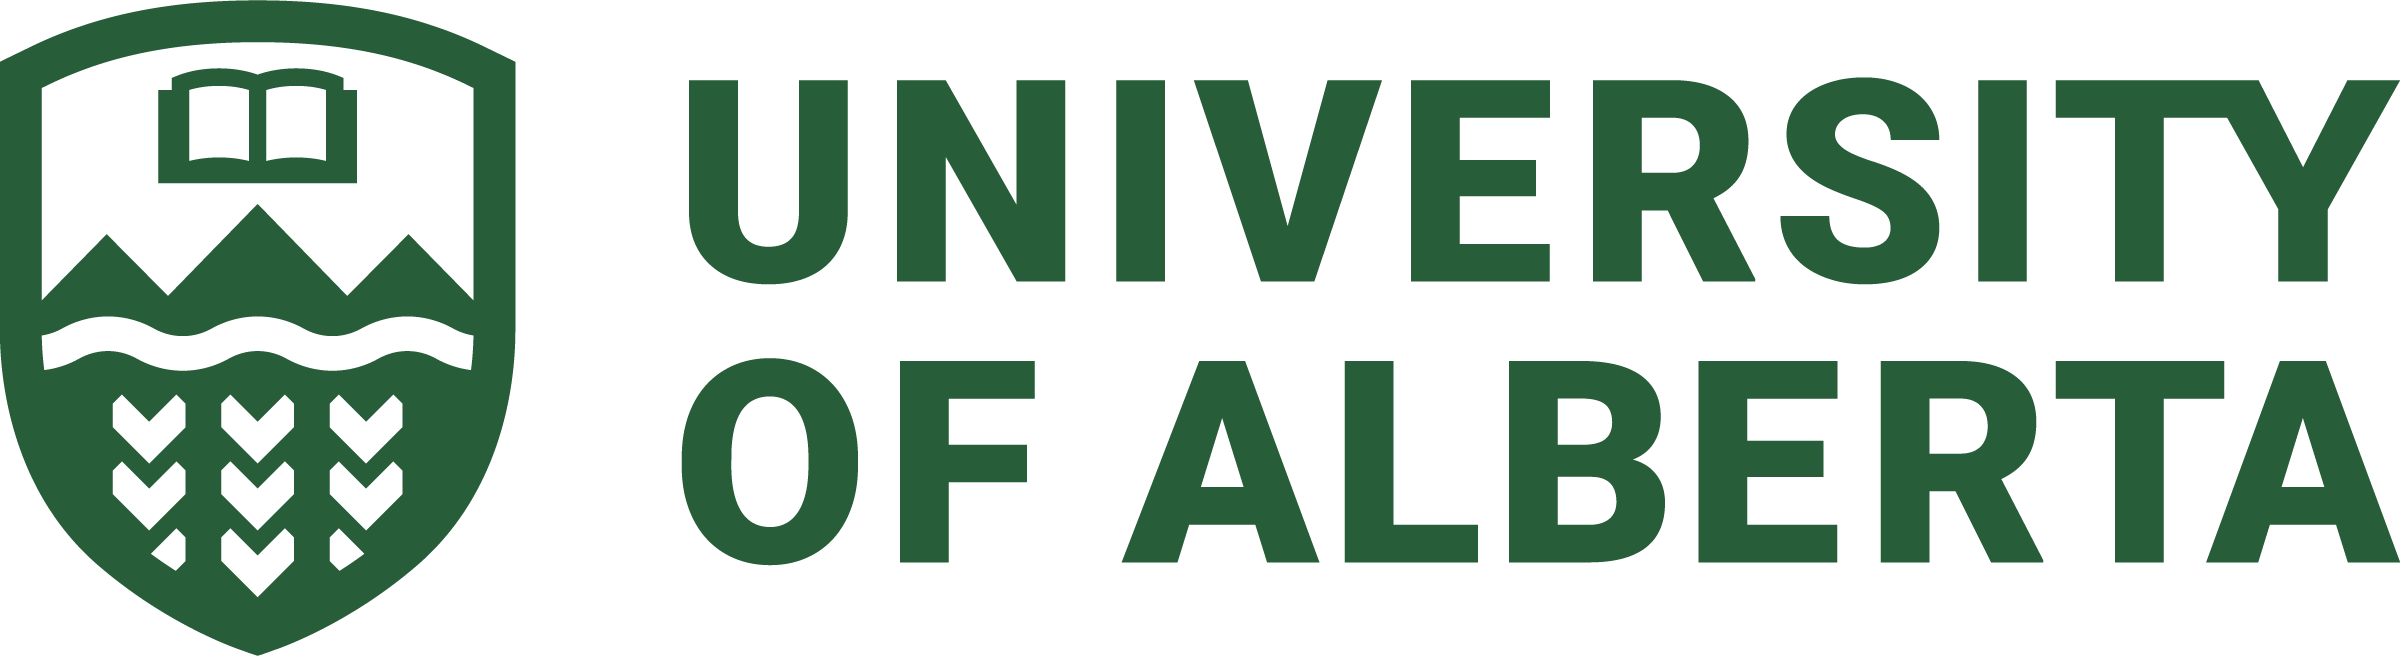 University of Alberta logo.